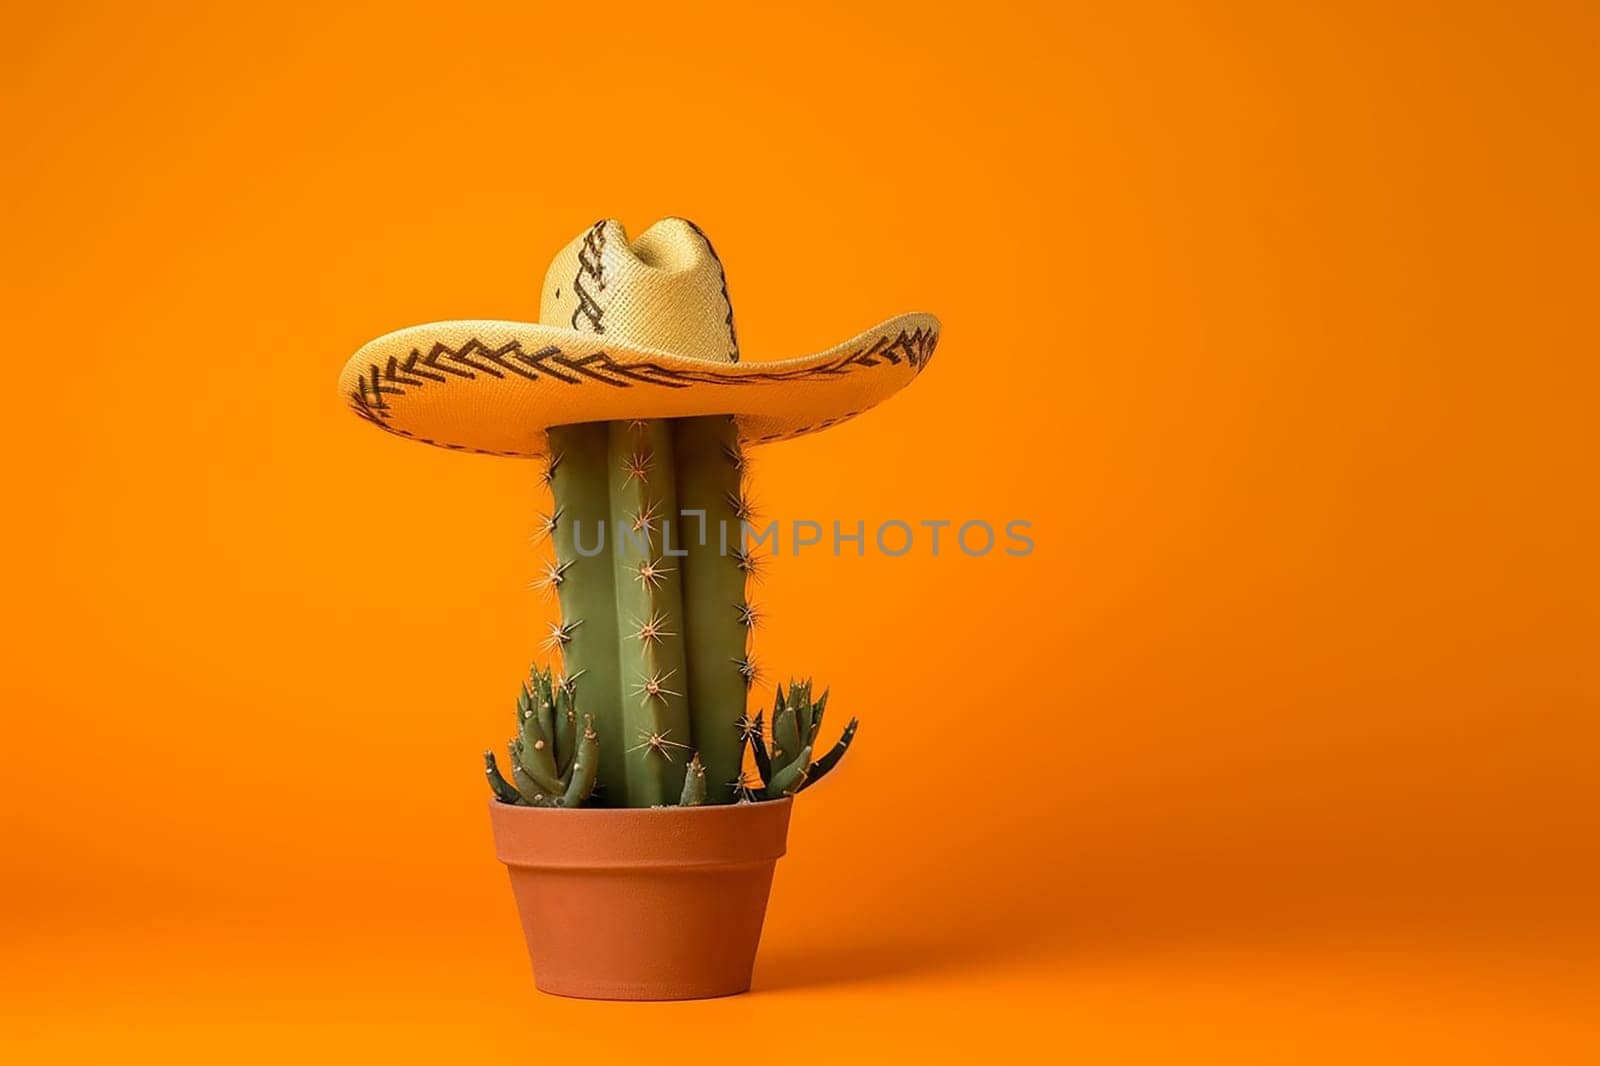 Cactus wearing sombrero against orange background.